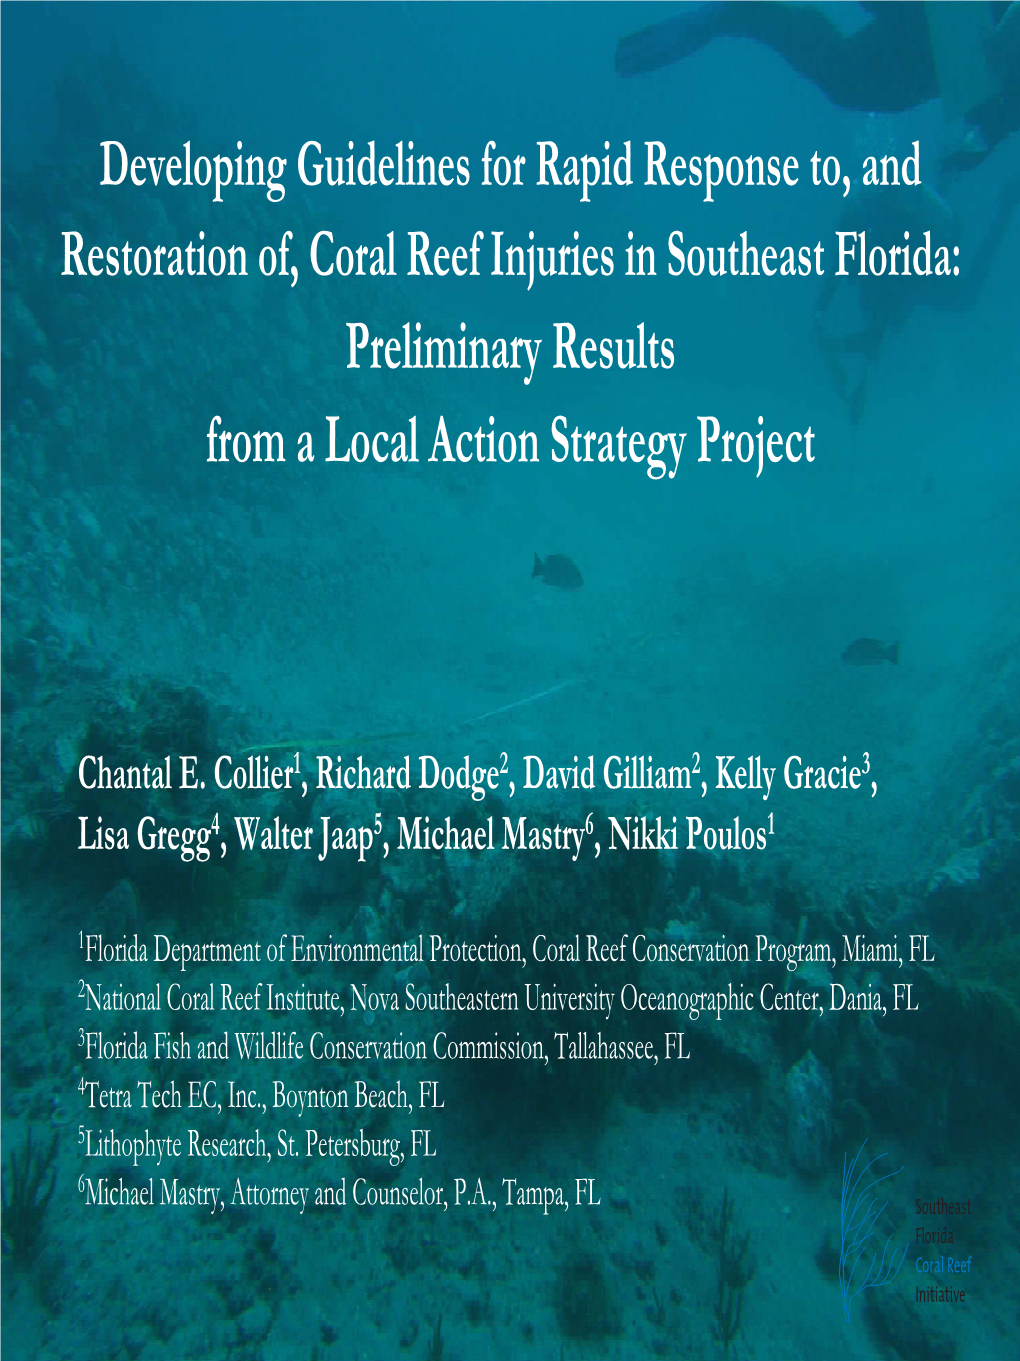 Southeast Florida Coral Reef Initiative (SEFCRI)